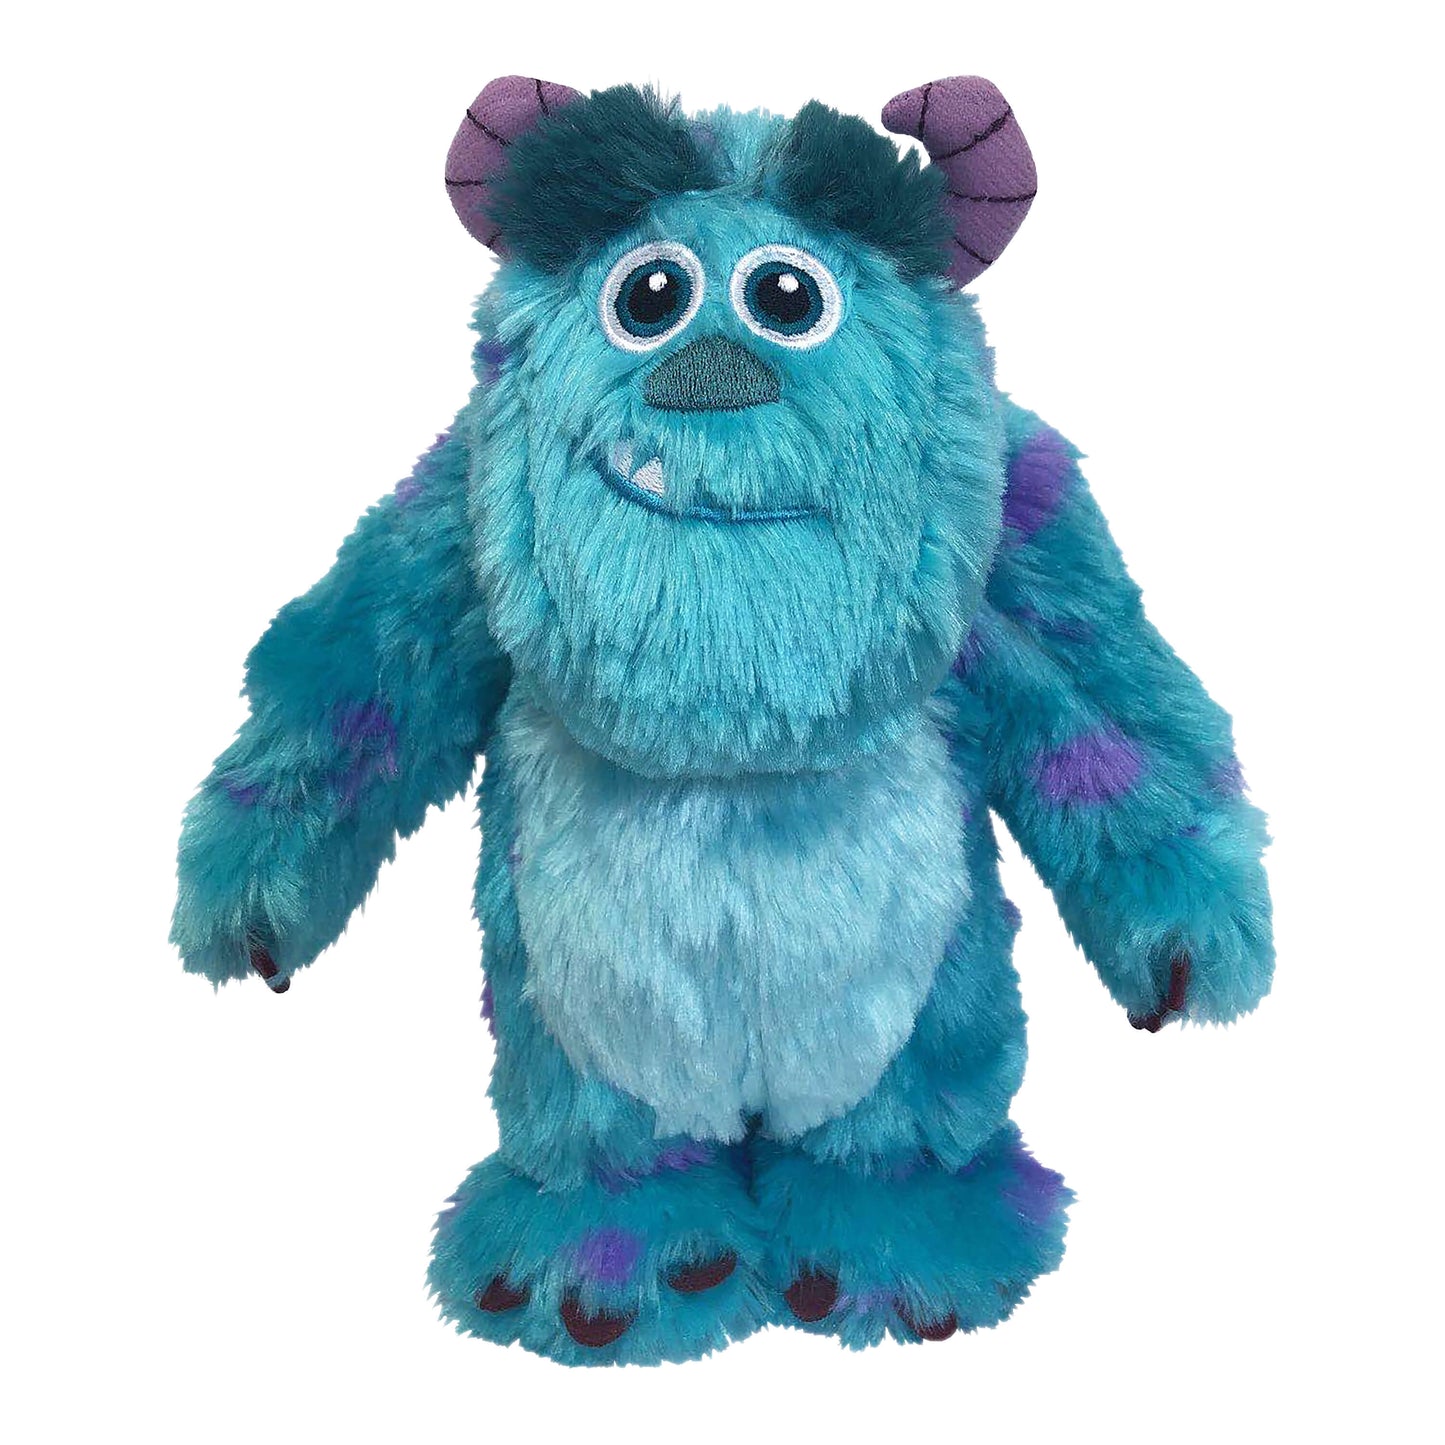 Peluche Pixar Sulley - Monster inc